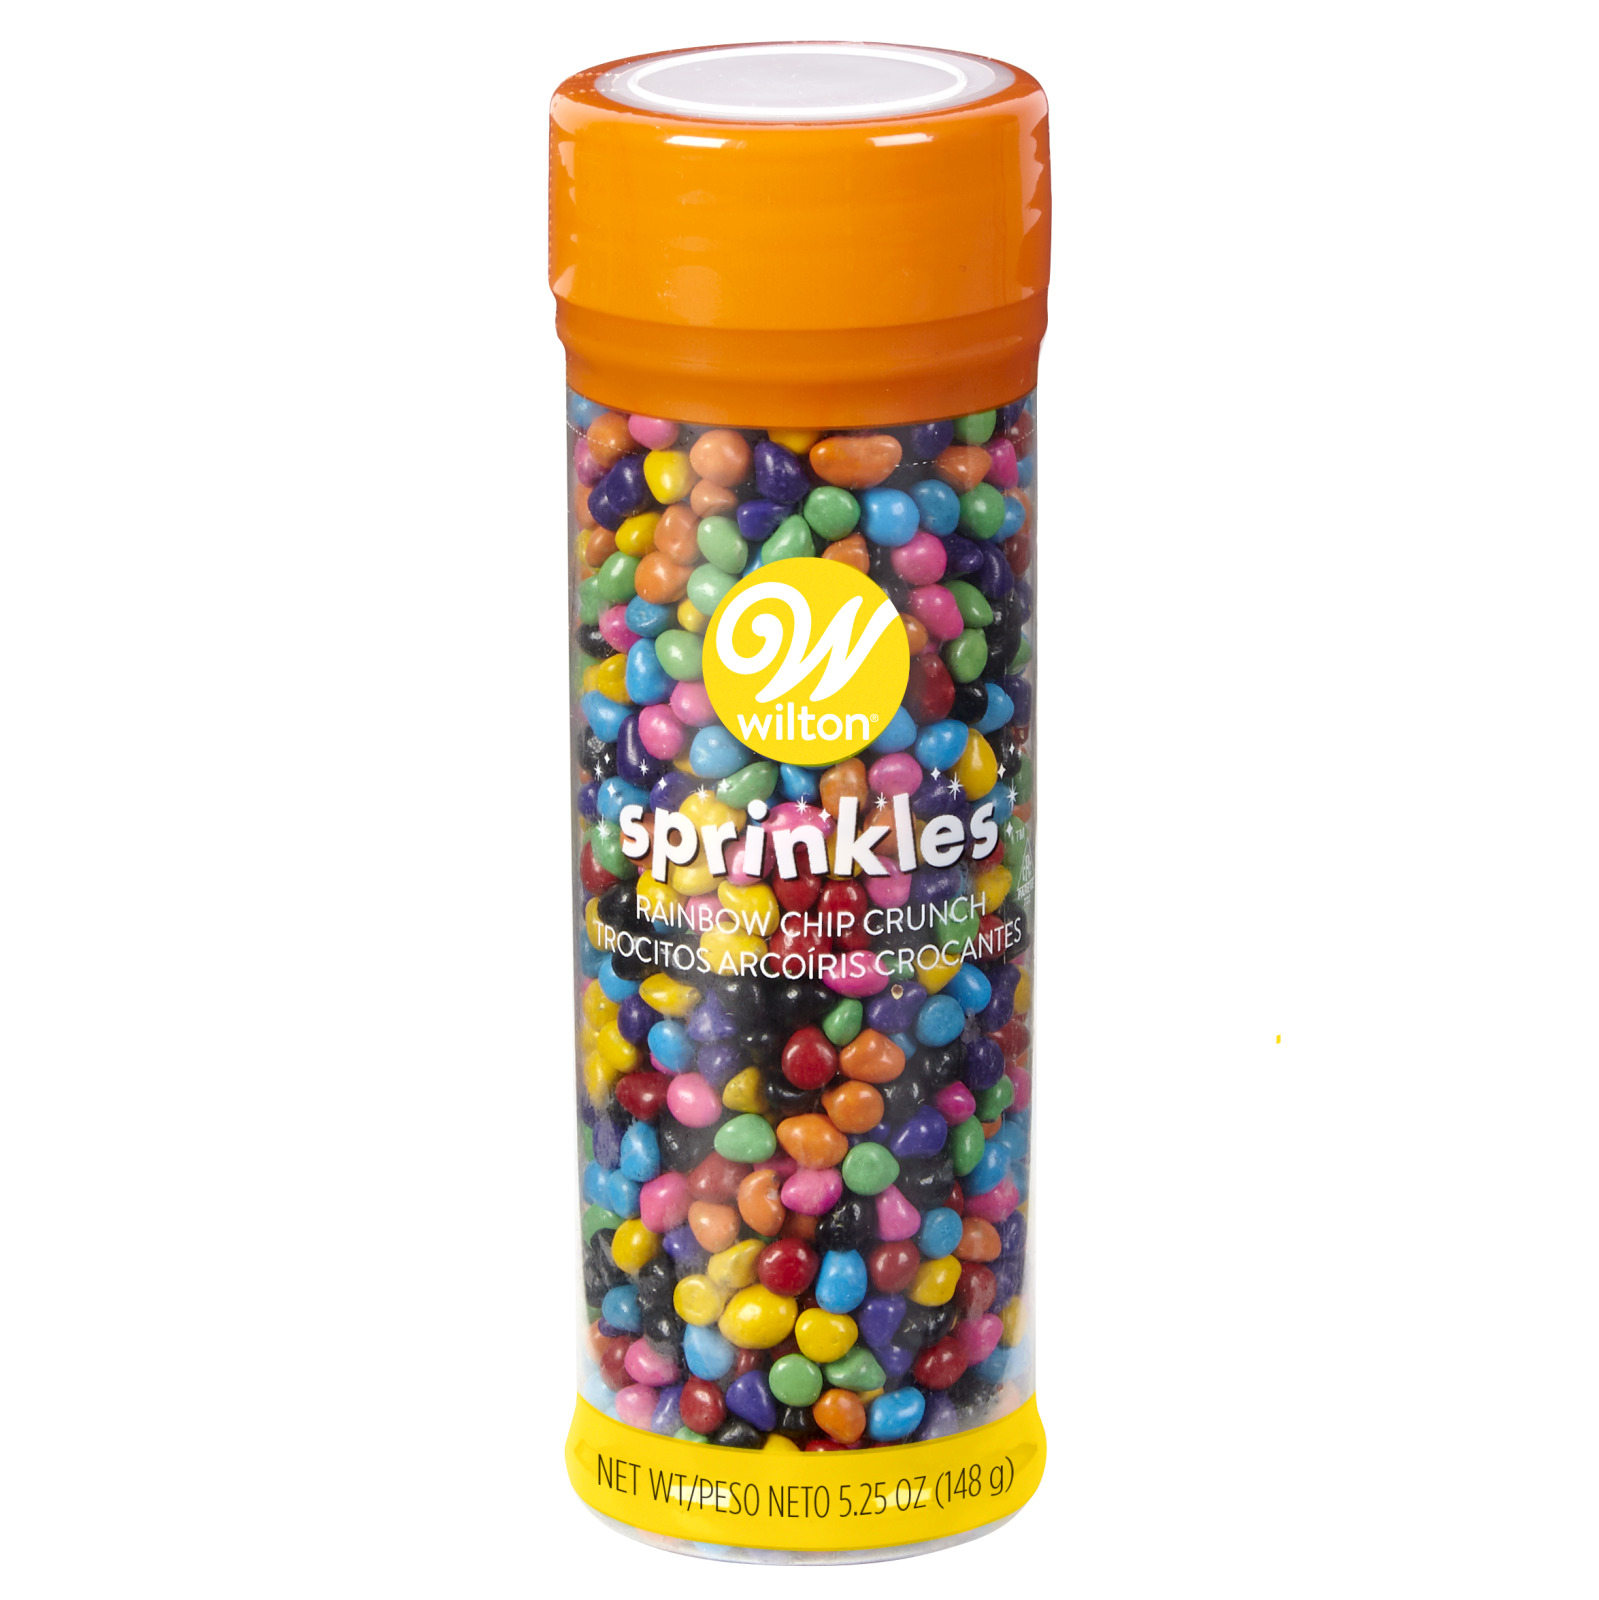 Rainbow Chip Crunch Sprinkles, Item # 710-5364